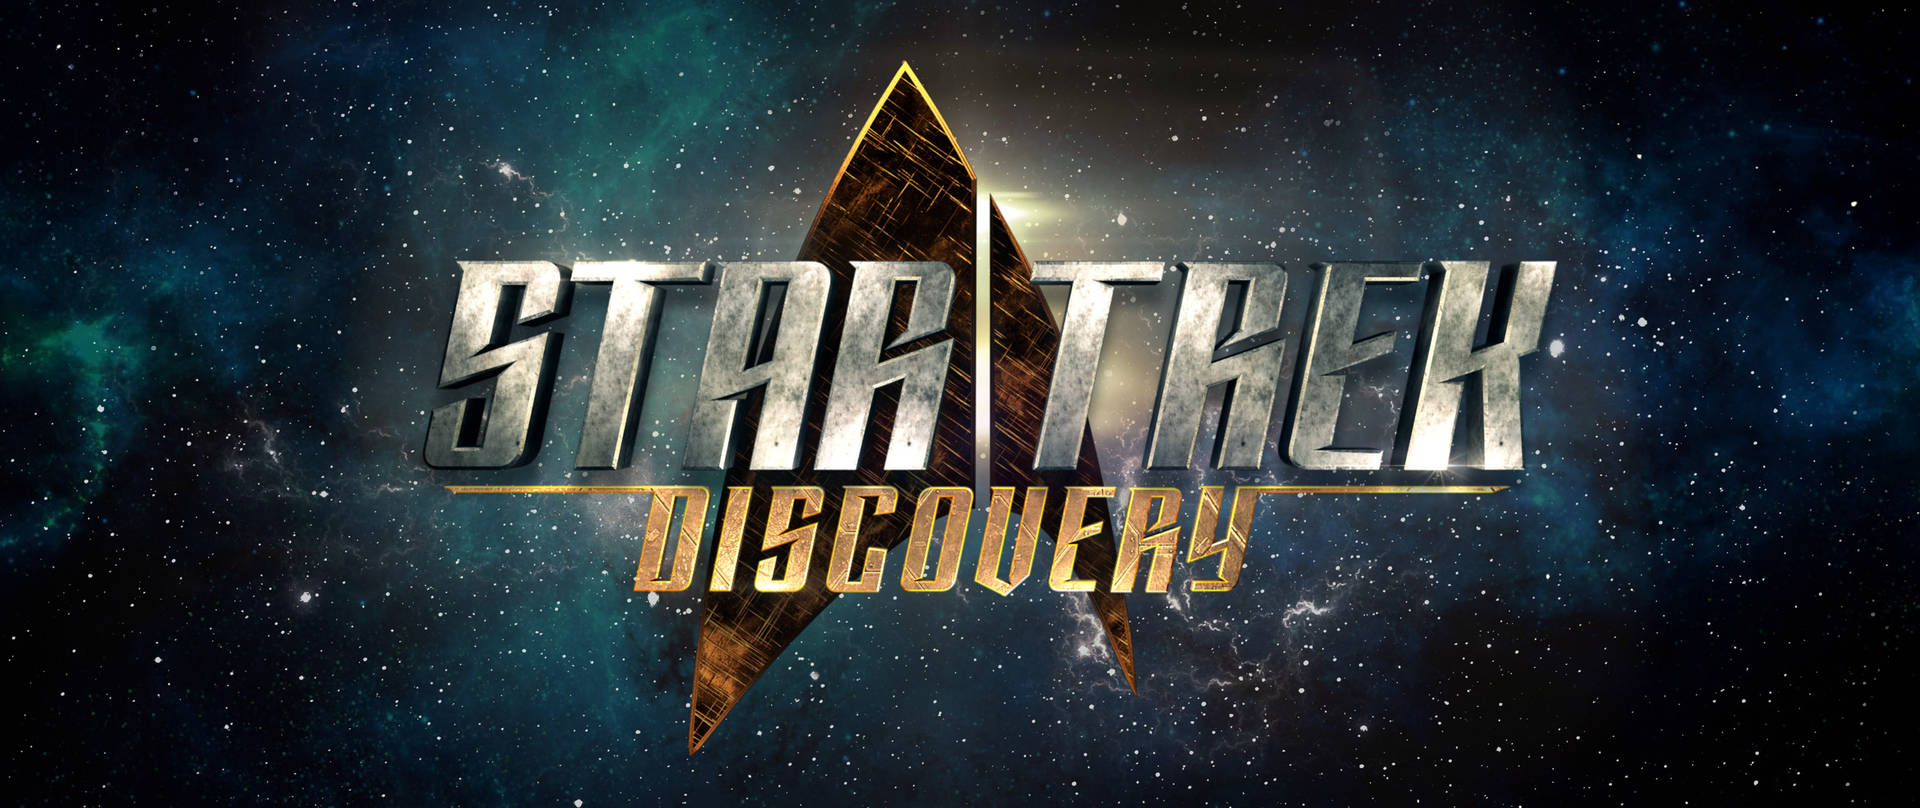 Star Trek Discovery Logo Background